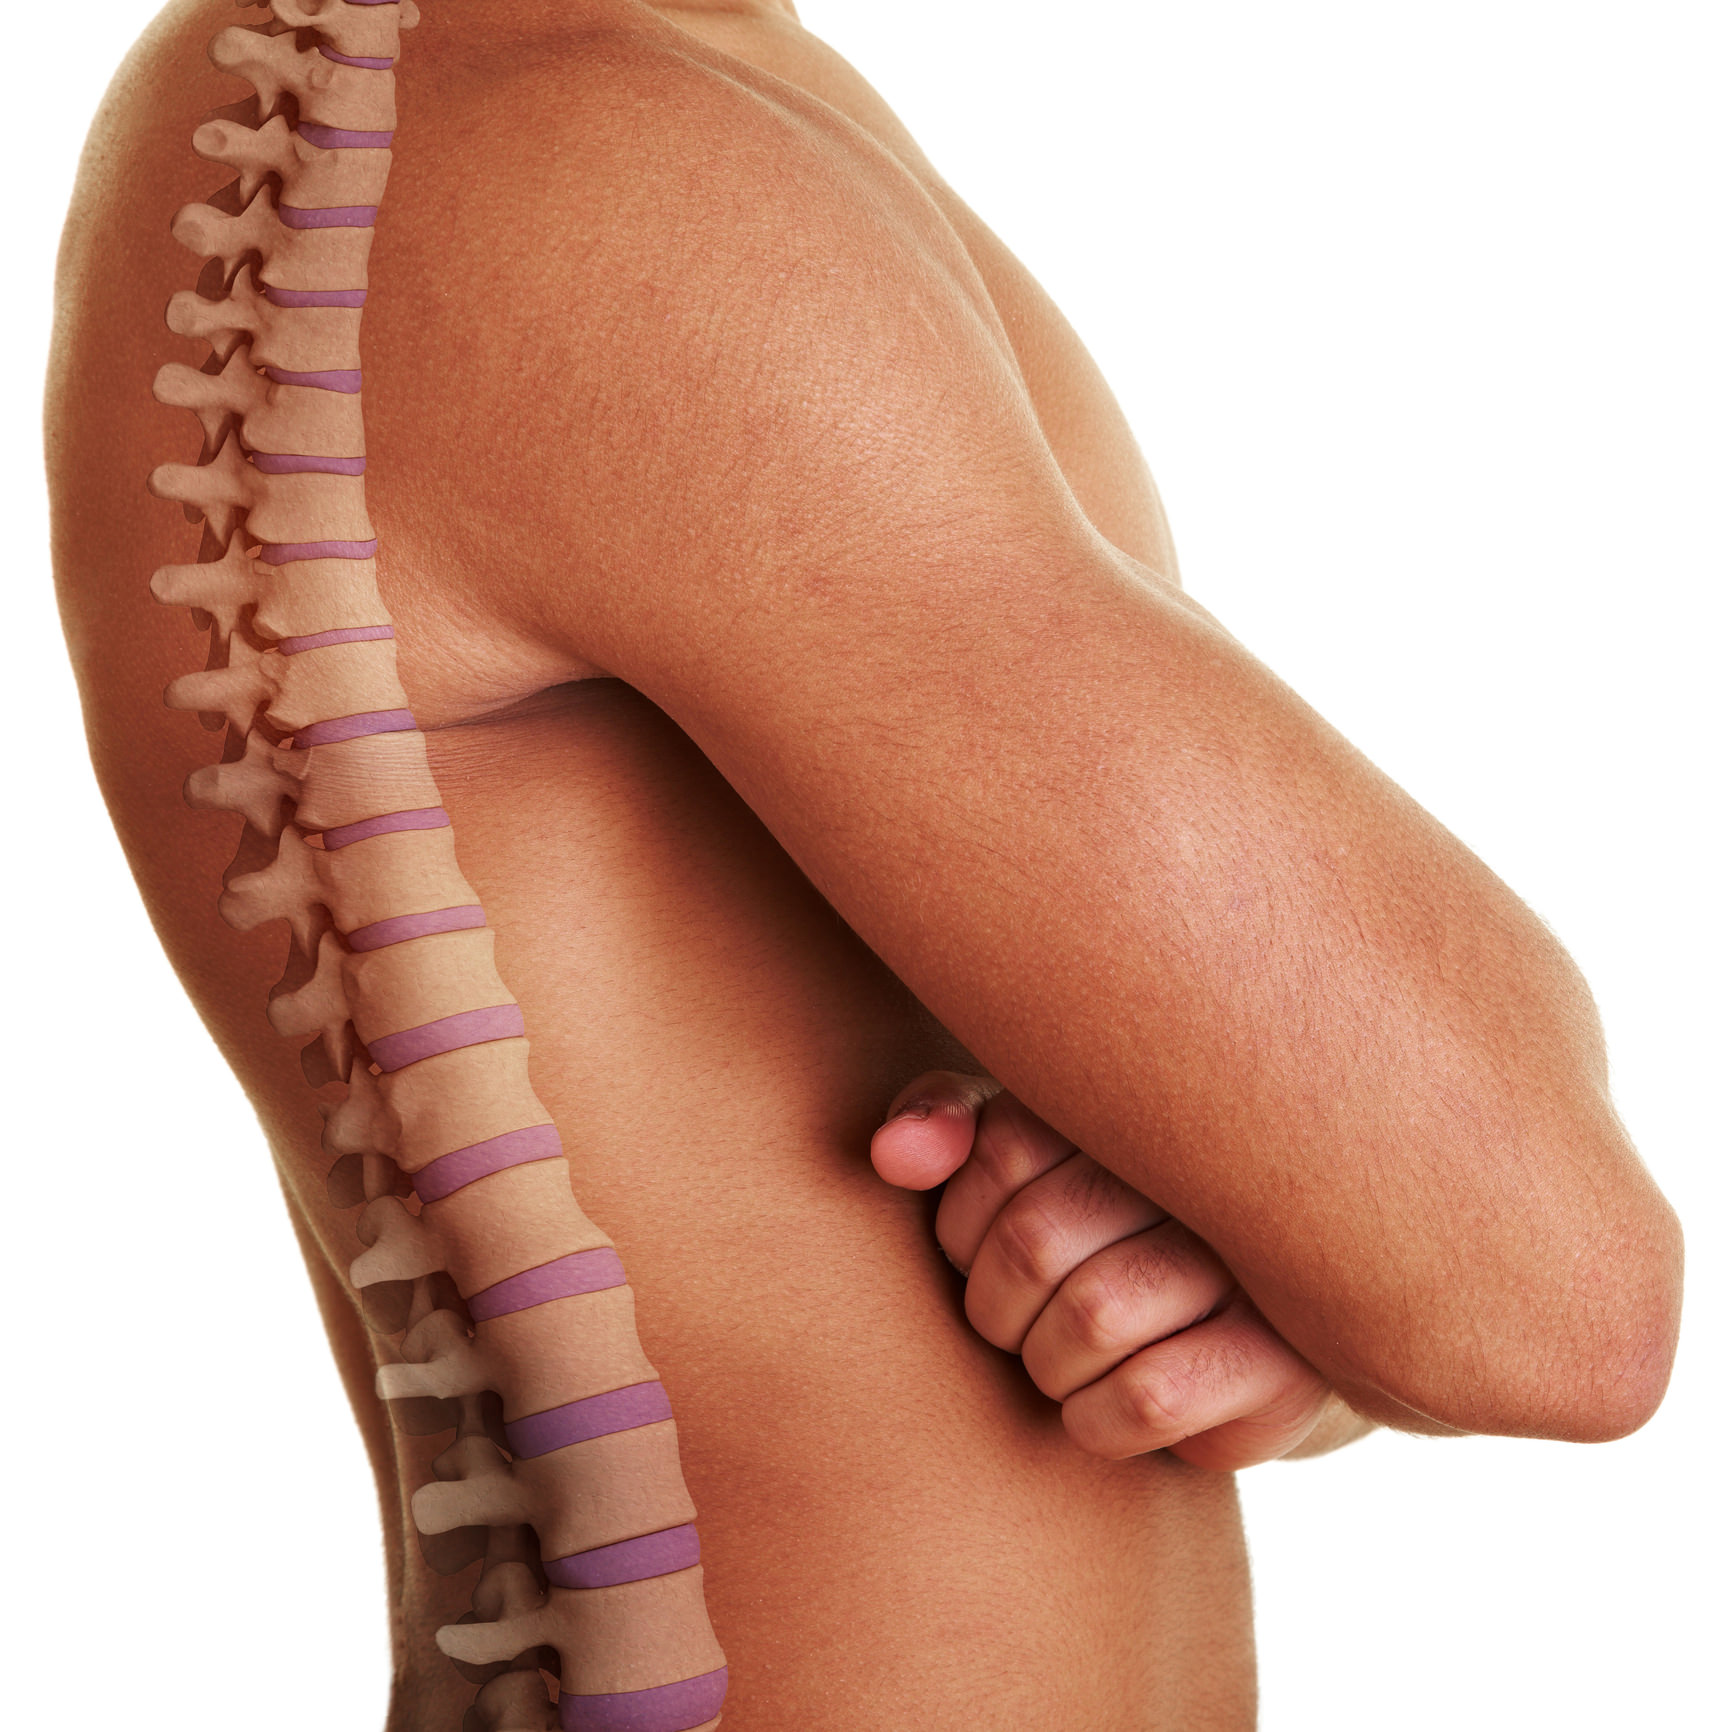 Treatments Spinal Cord Stimulation by Santa Ana Pain Clinic 1 1 - Spinal Cord Stimulation